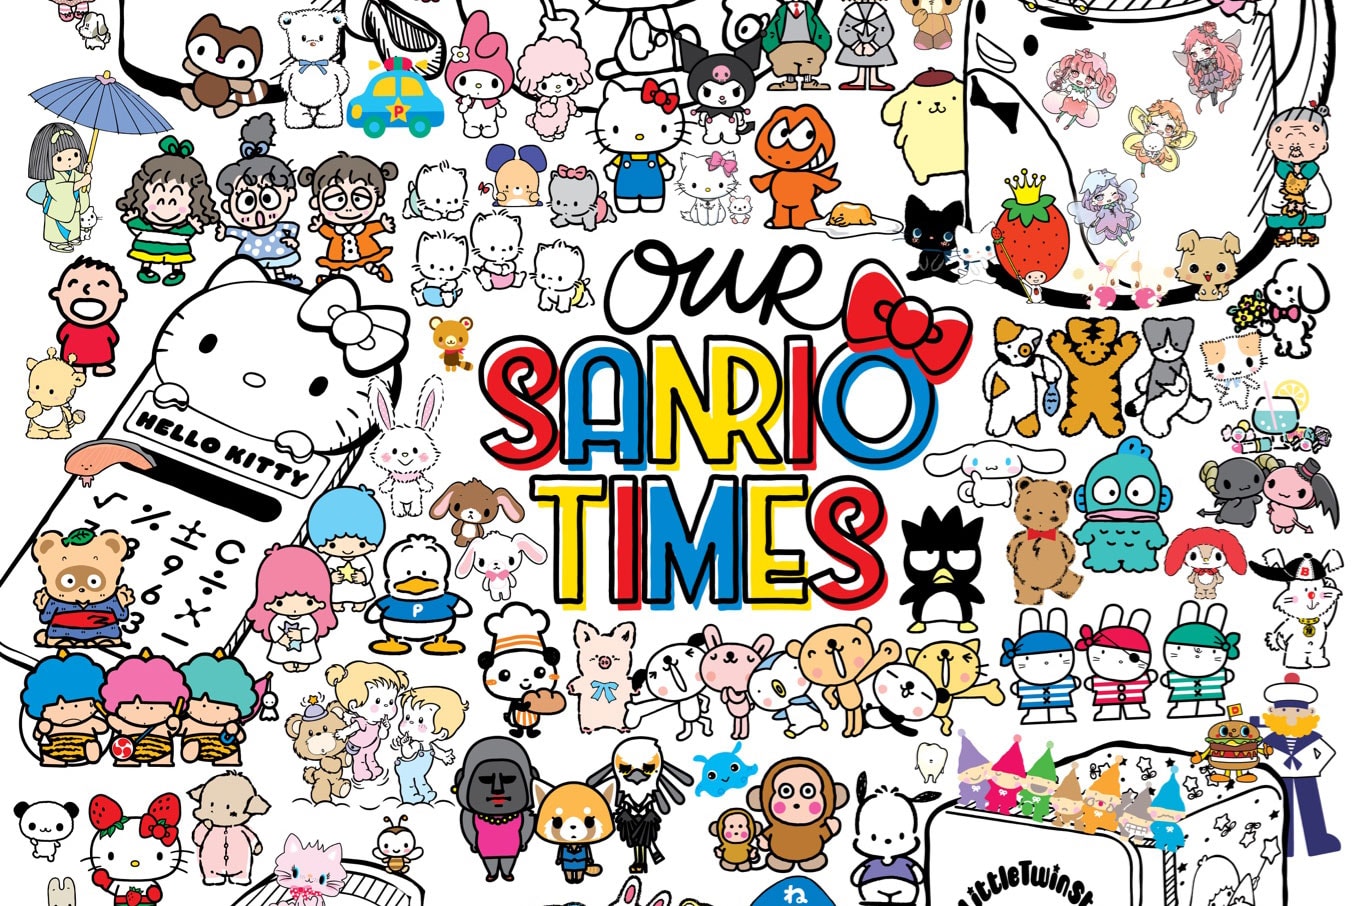 Sanrio 將攜同 100 個經典角色將登陸「Our Sanrio Times」澳門展覽